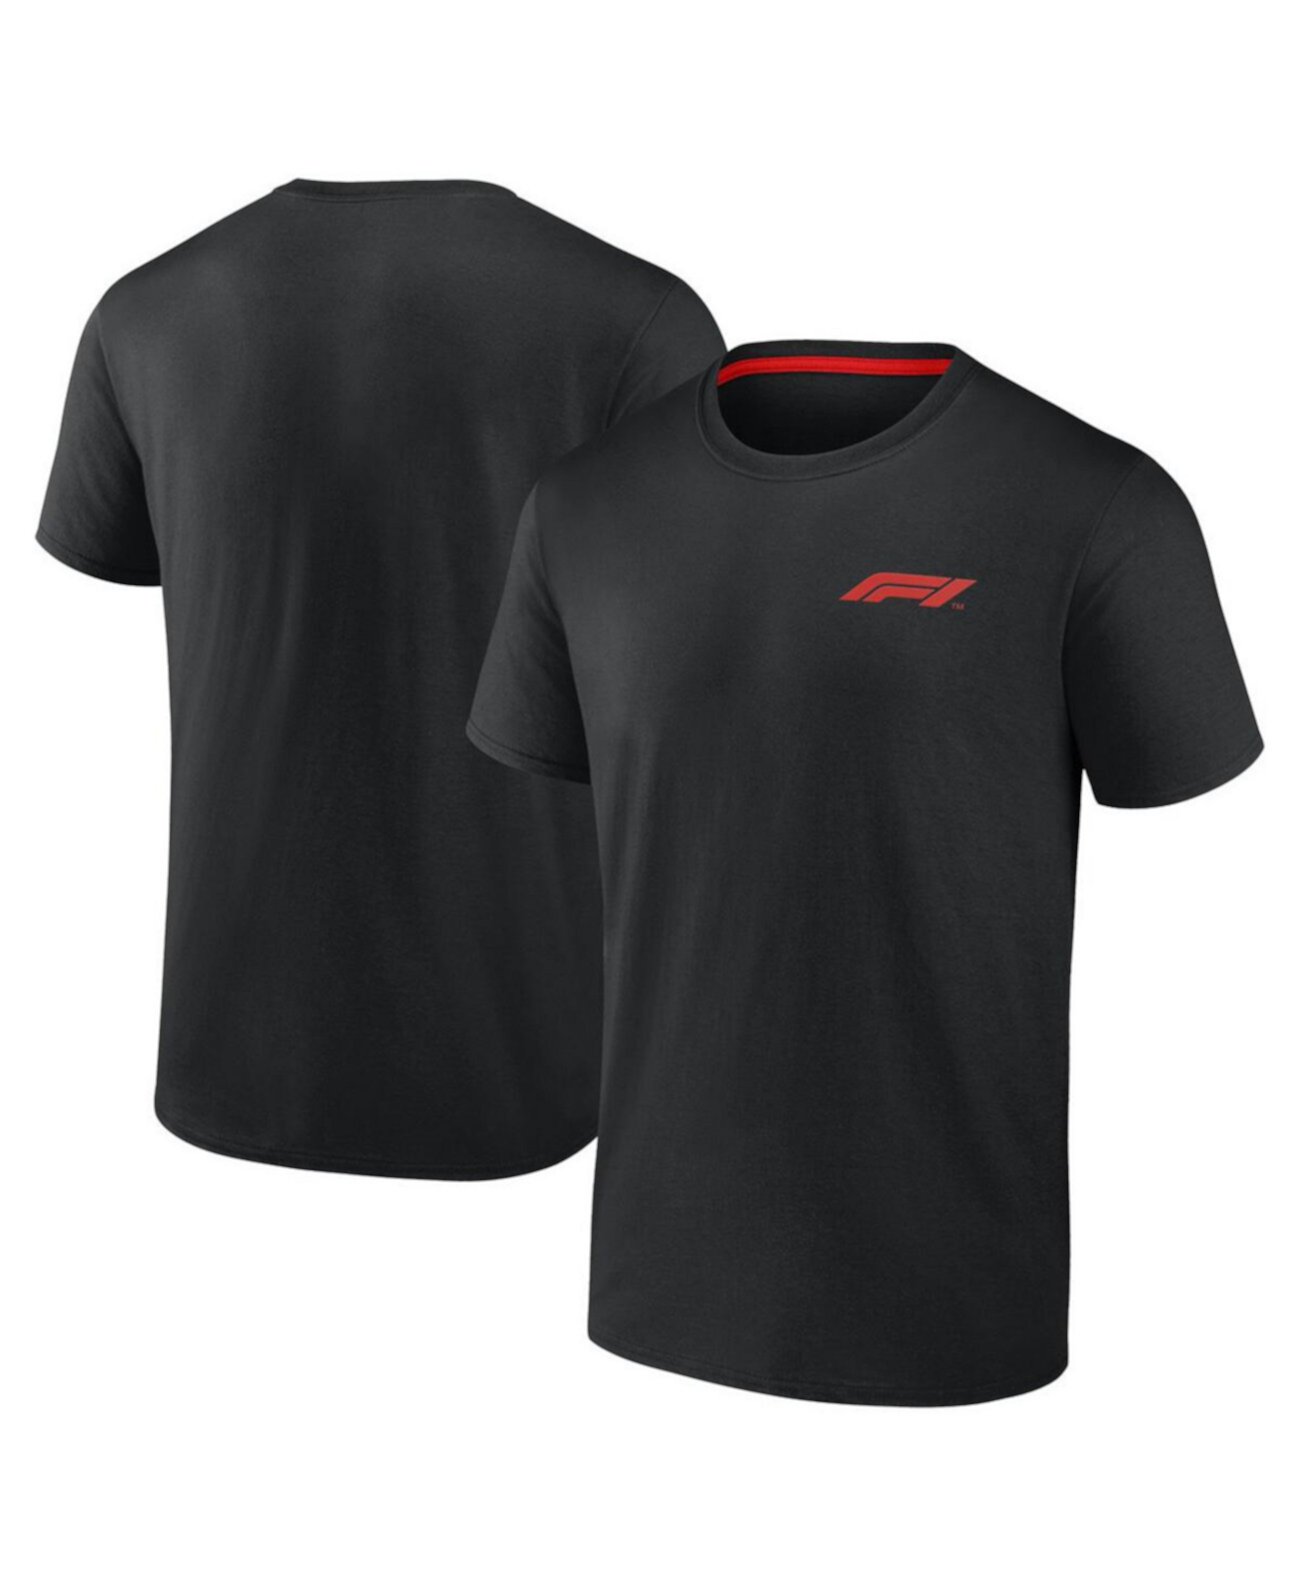 Мужская черная футболка с логотипом Formula 1 Fanatics